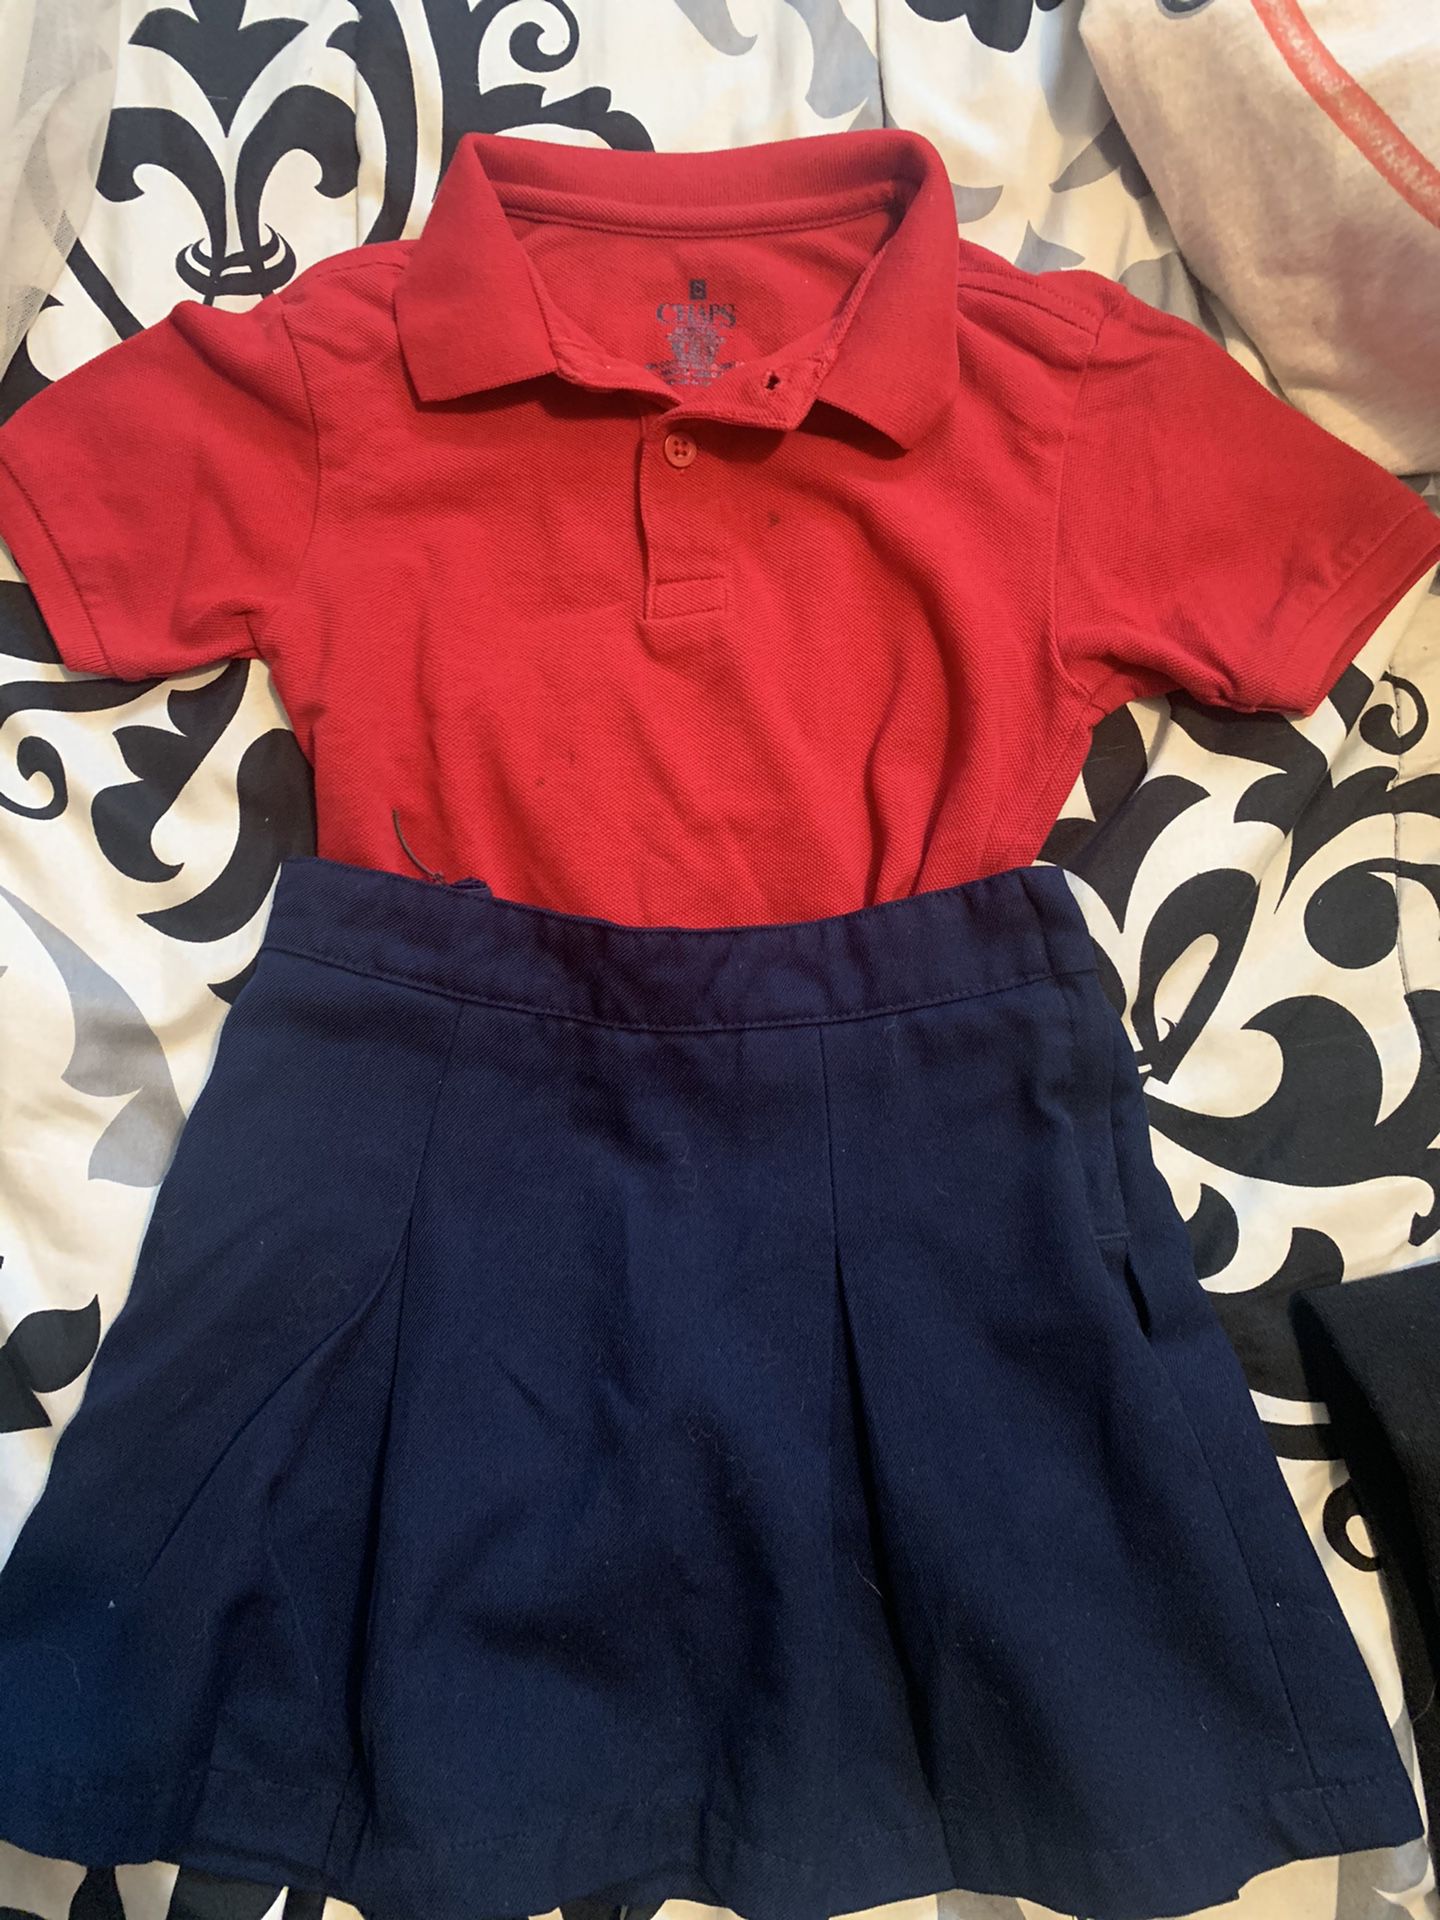 Free girl uniforms 5/6